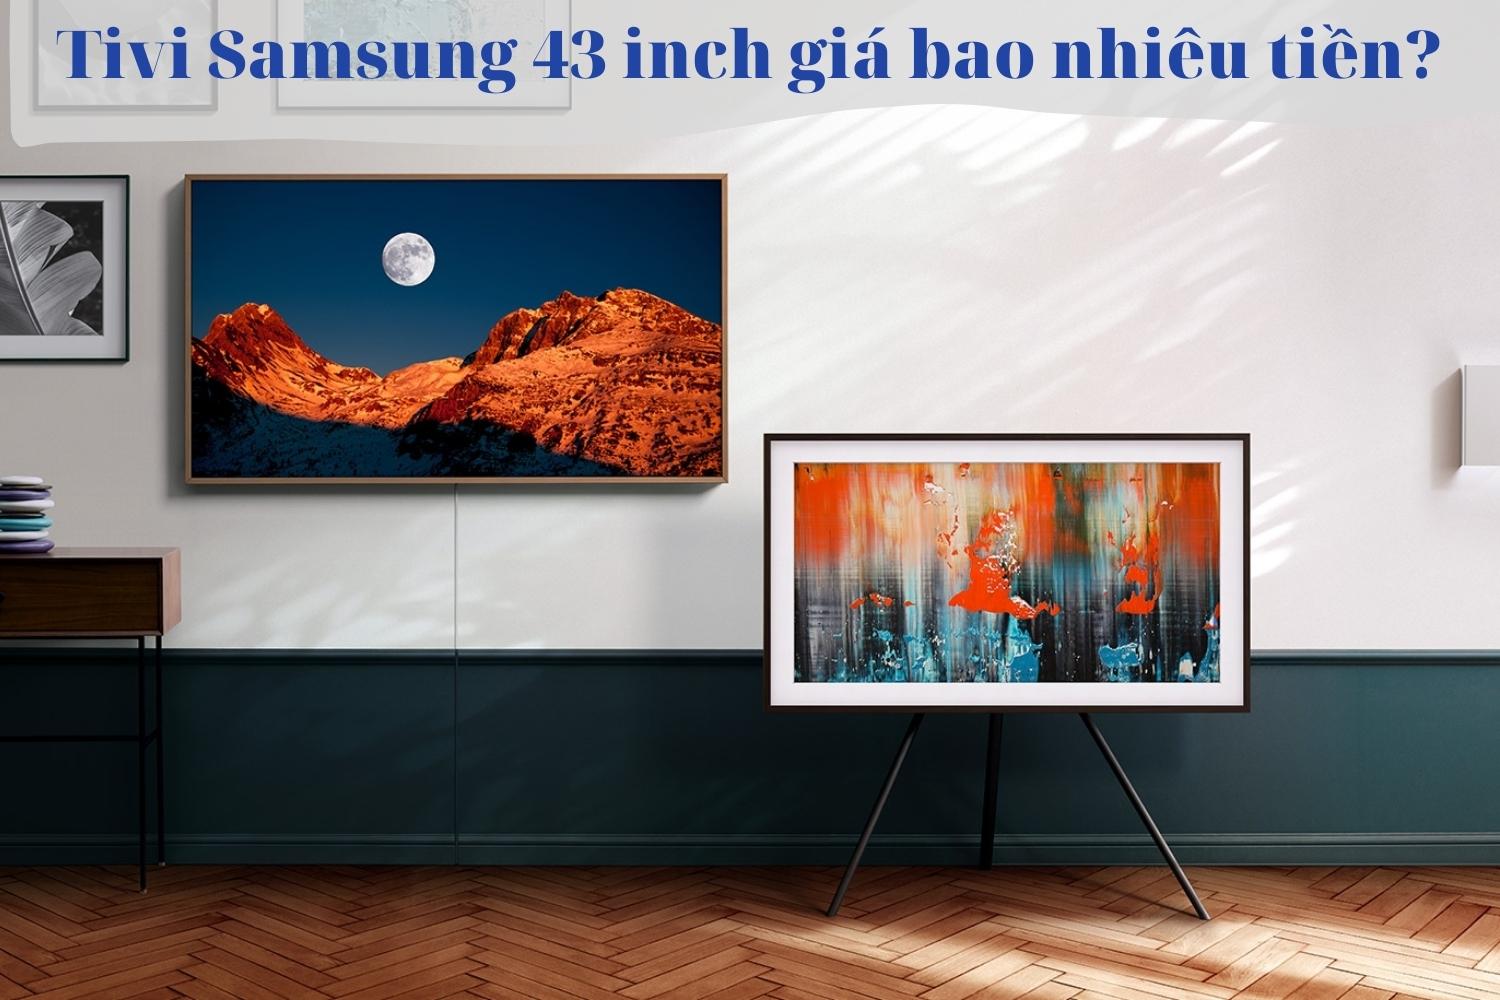 Tivi Samsung 43 inch giá bao nhiêu tiền